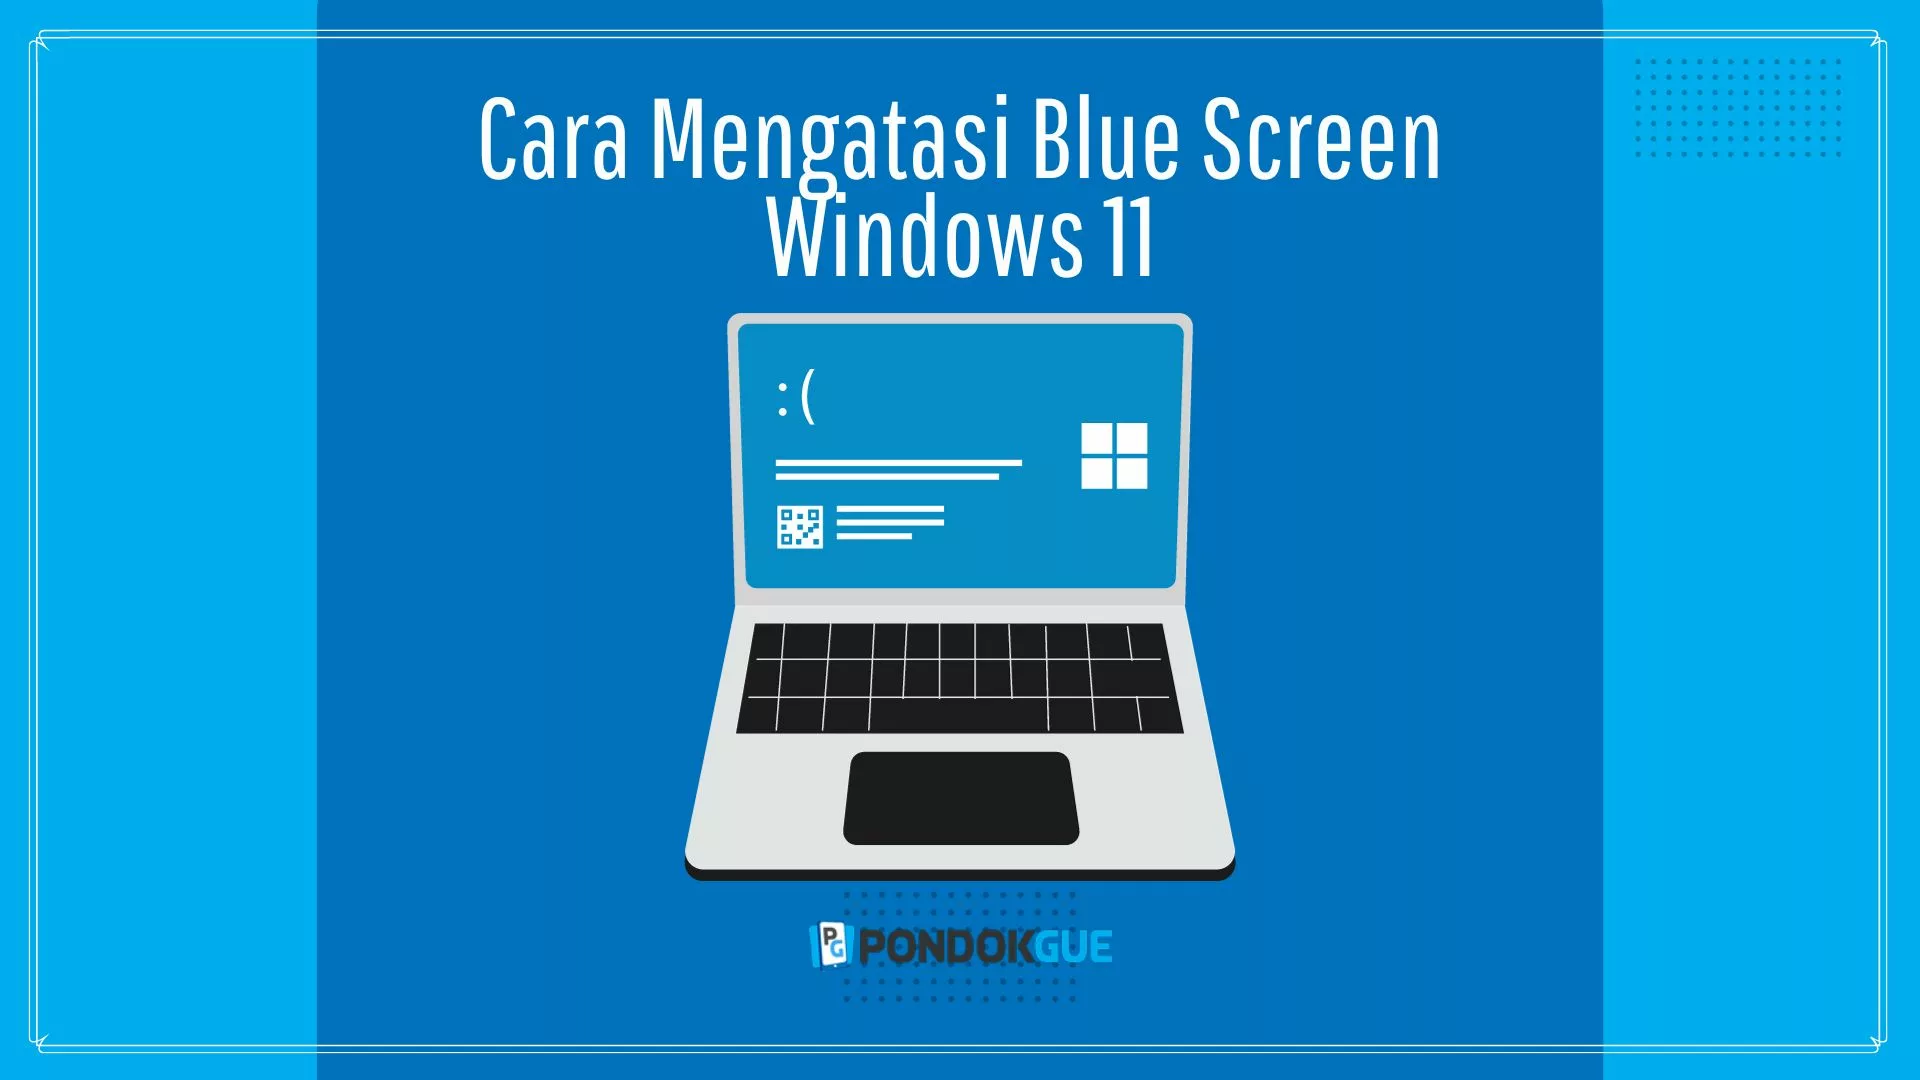 Cara Mengatasi Blue Screen Windows 11 - Pondokgue.com